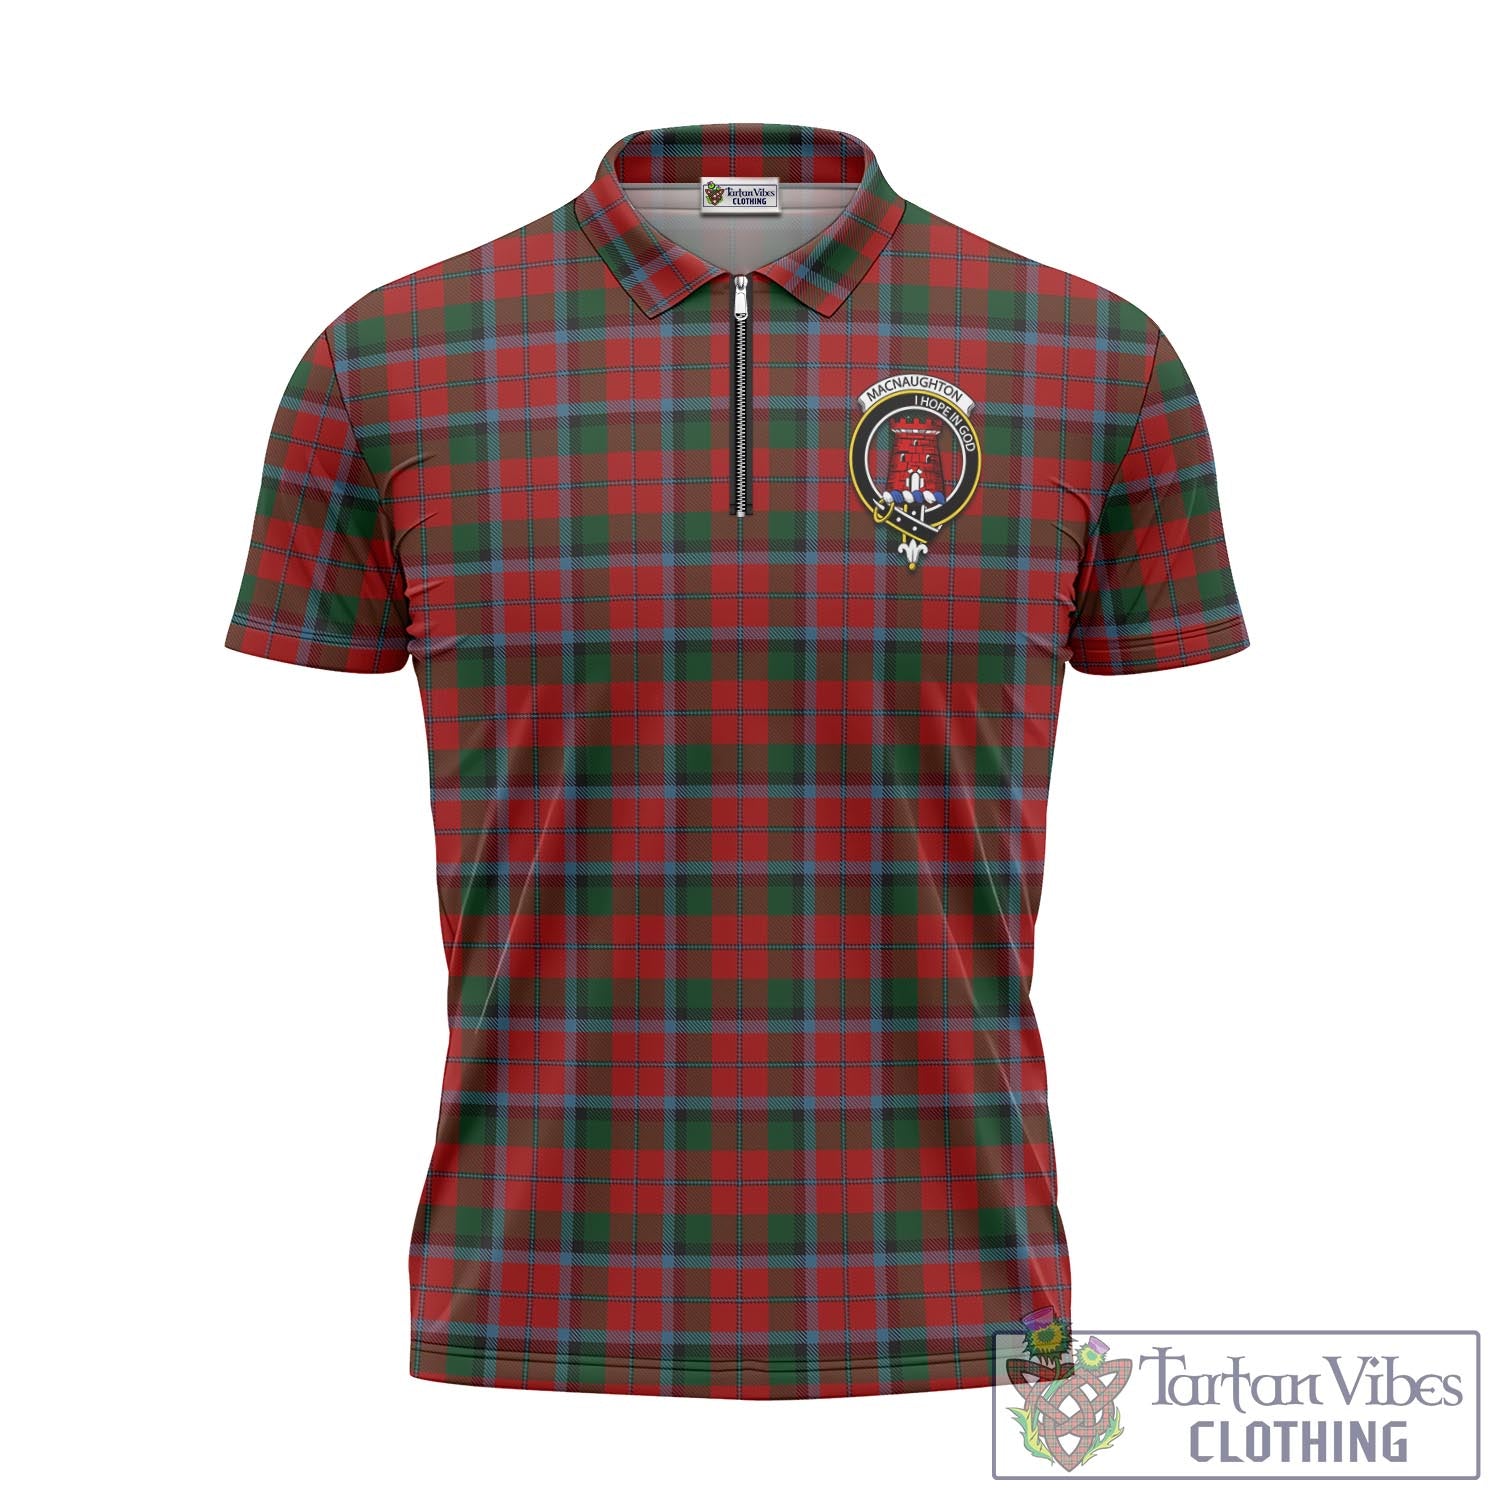 Tartan Vibes Clothing MacNaughton Tartan Zipper Polo Shirt with Family Crest